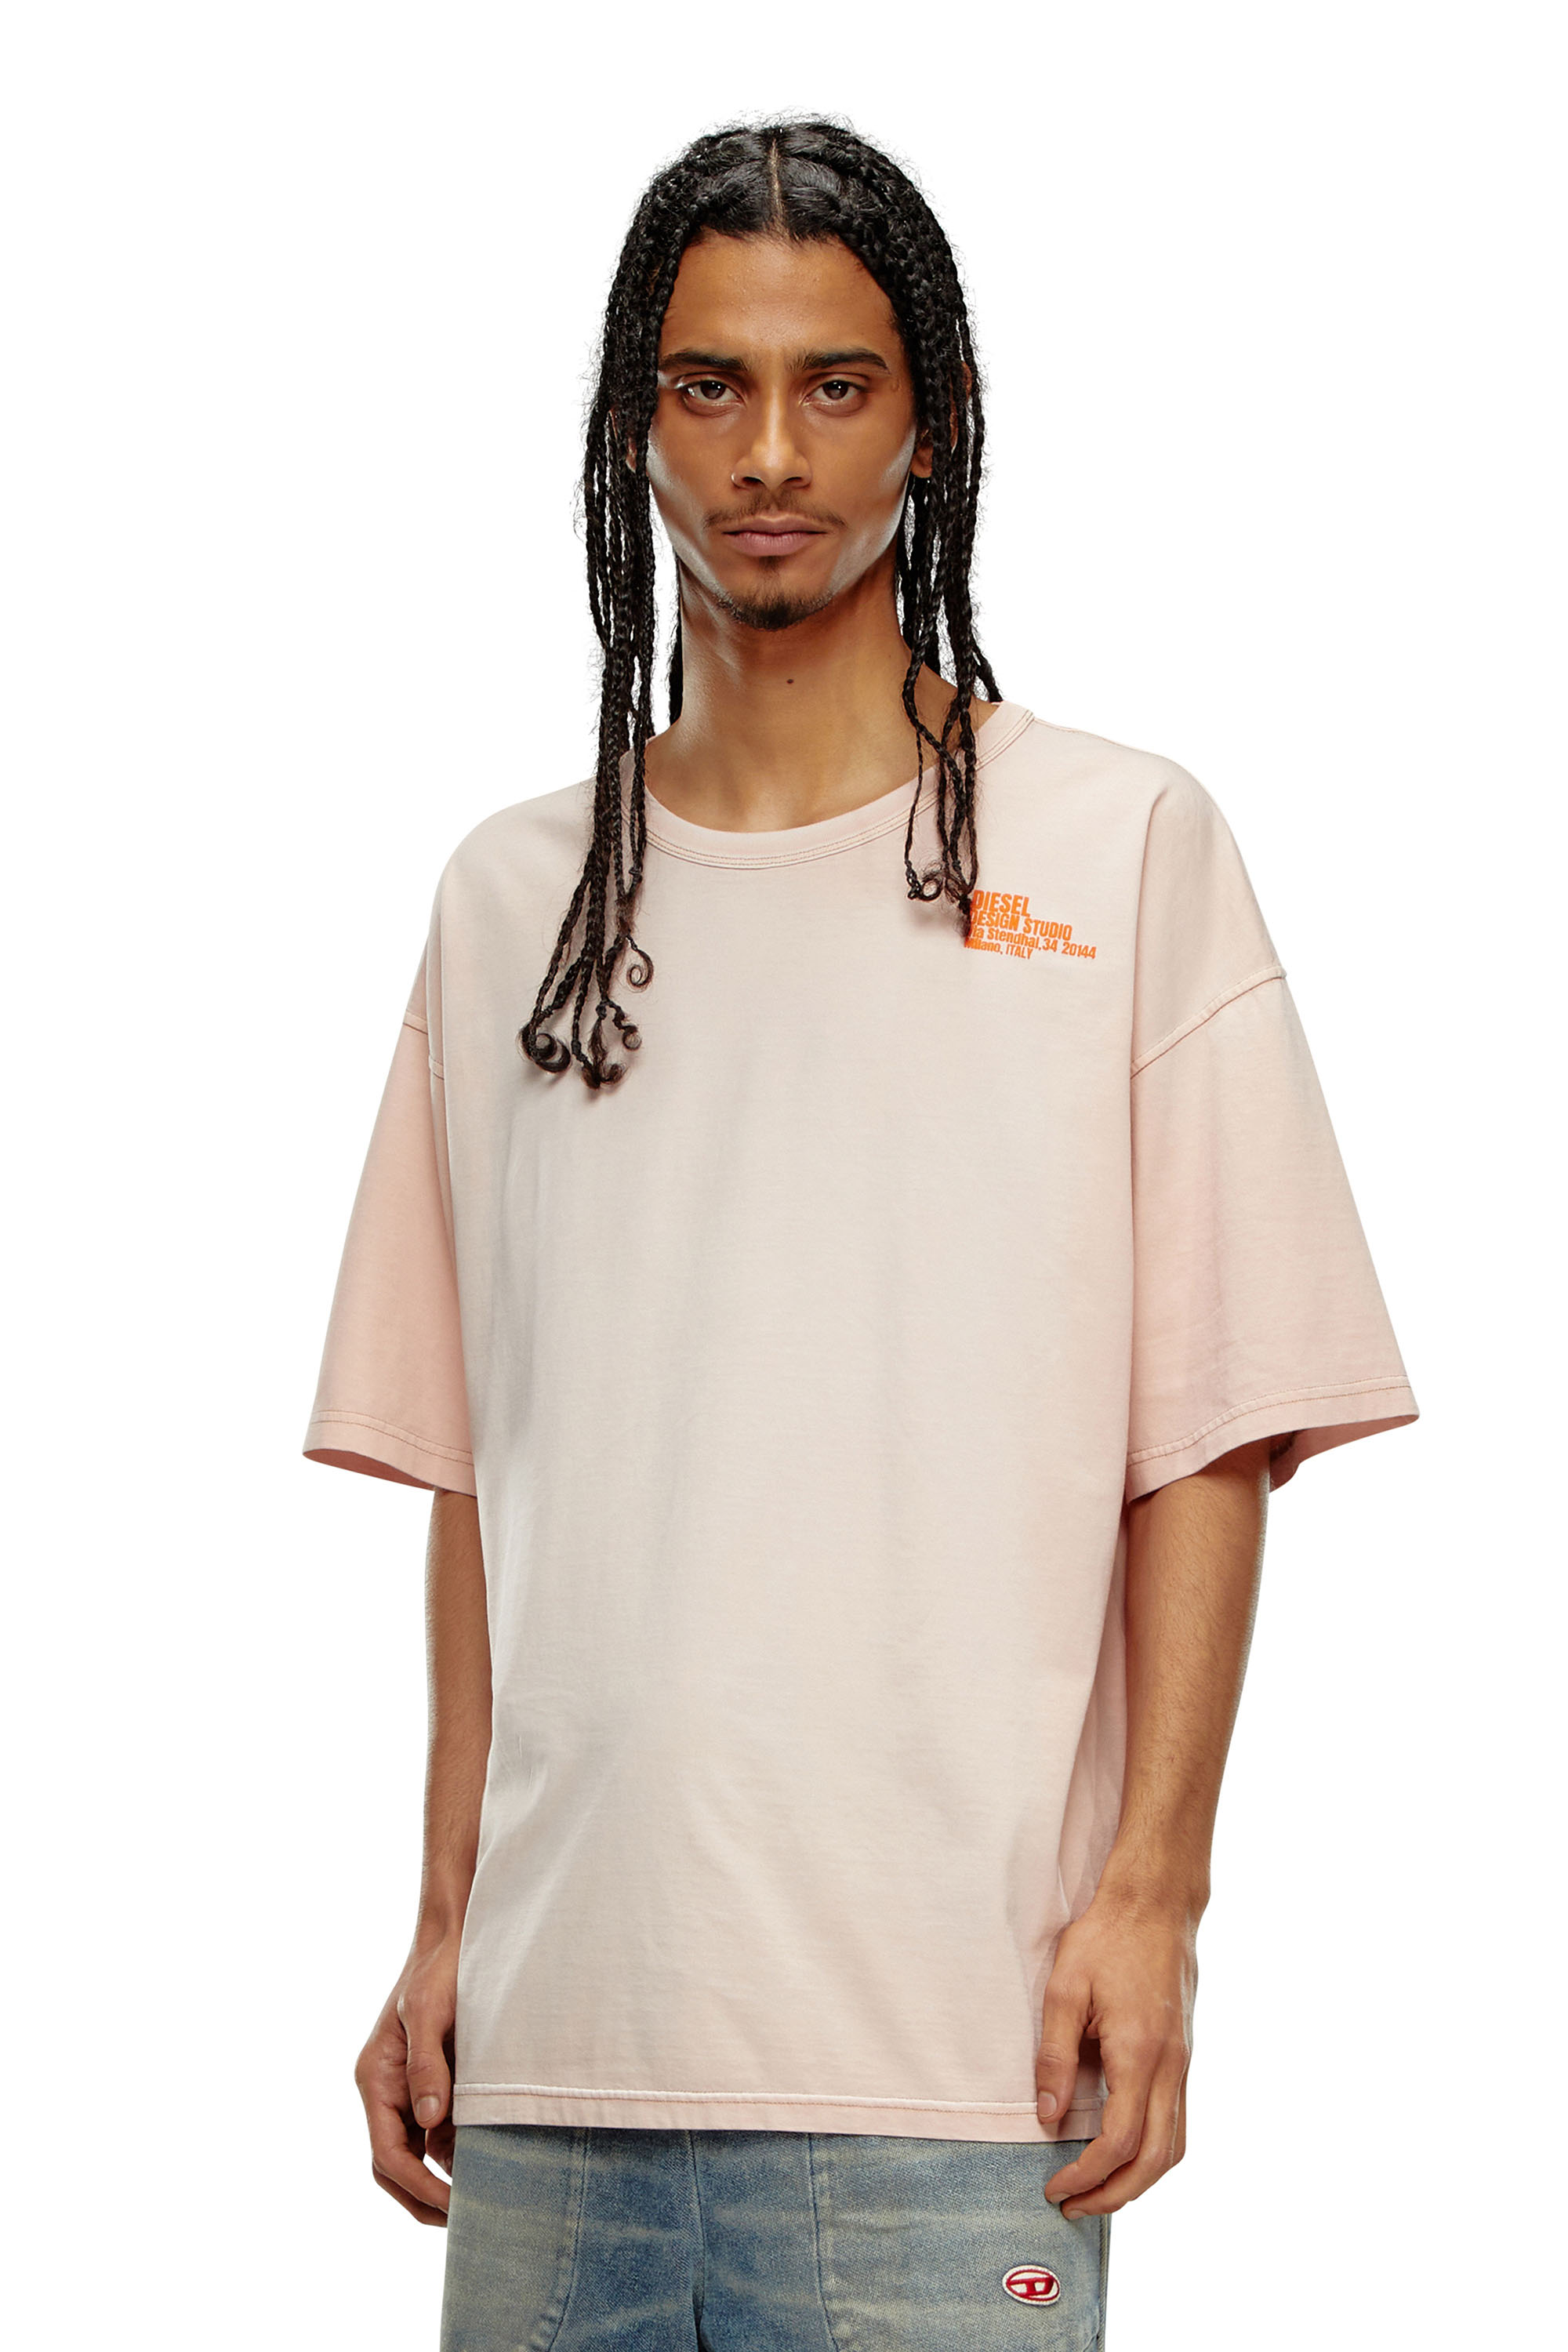 Diesel - T-BOXT-N7, Homme T-shirt avec mini imprimé Design Studio in Rose - Image 1